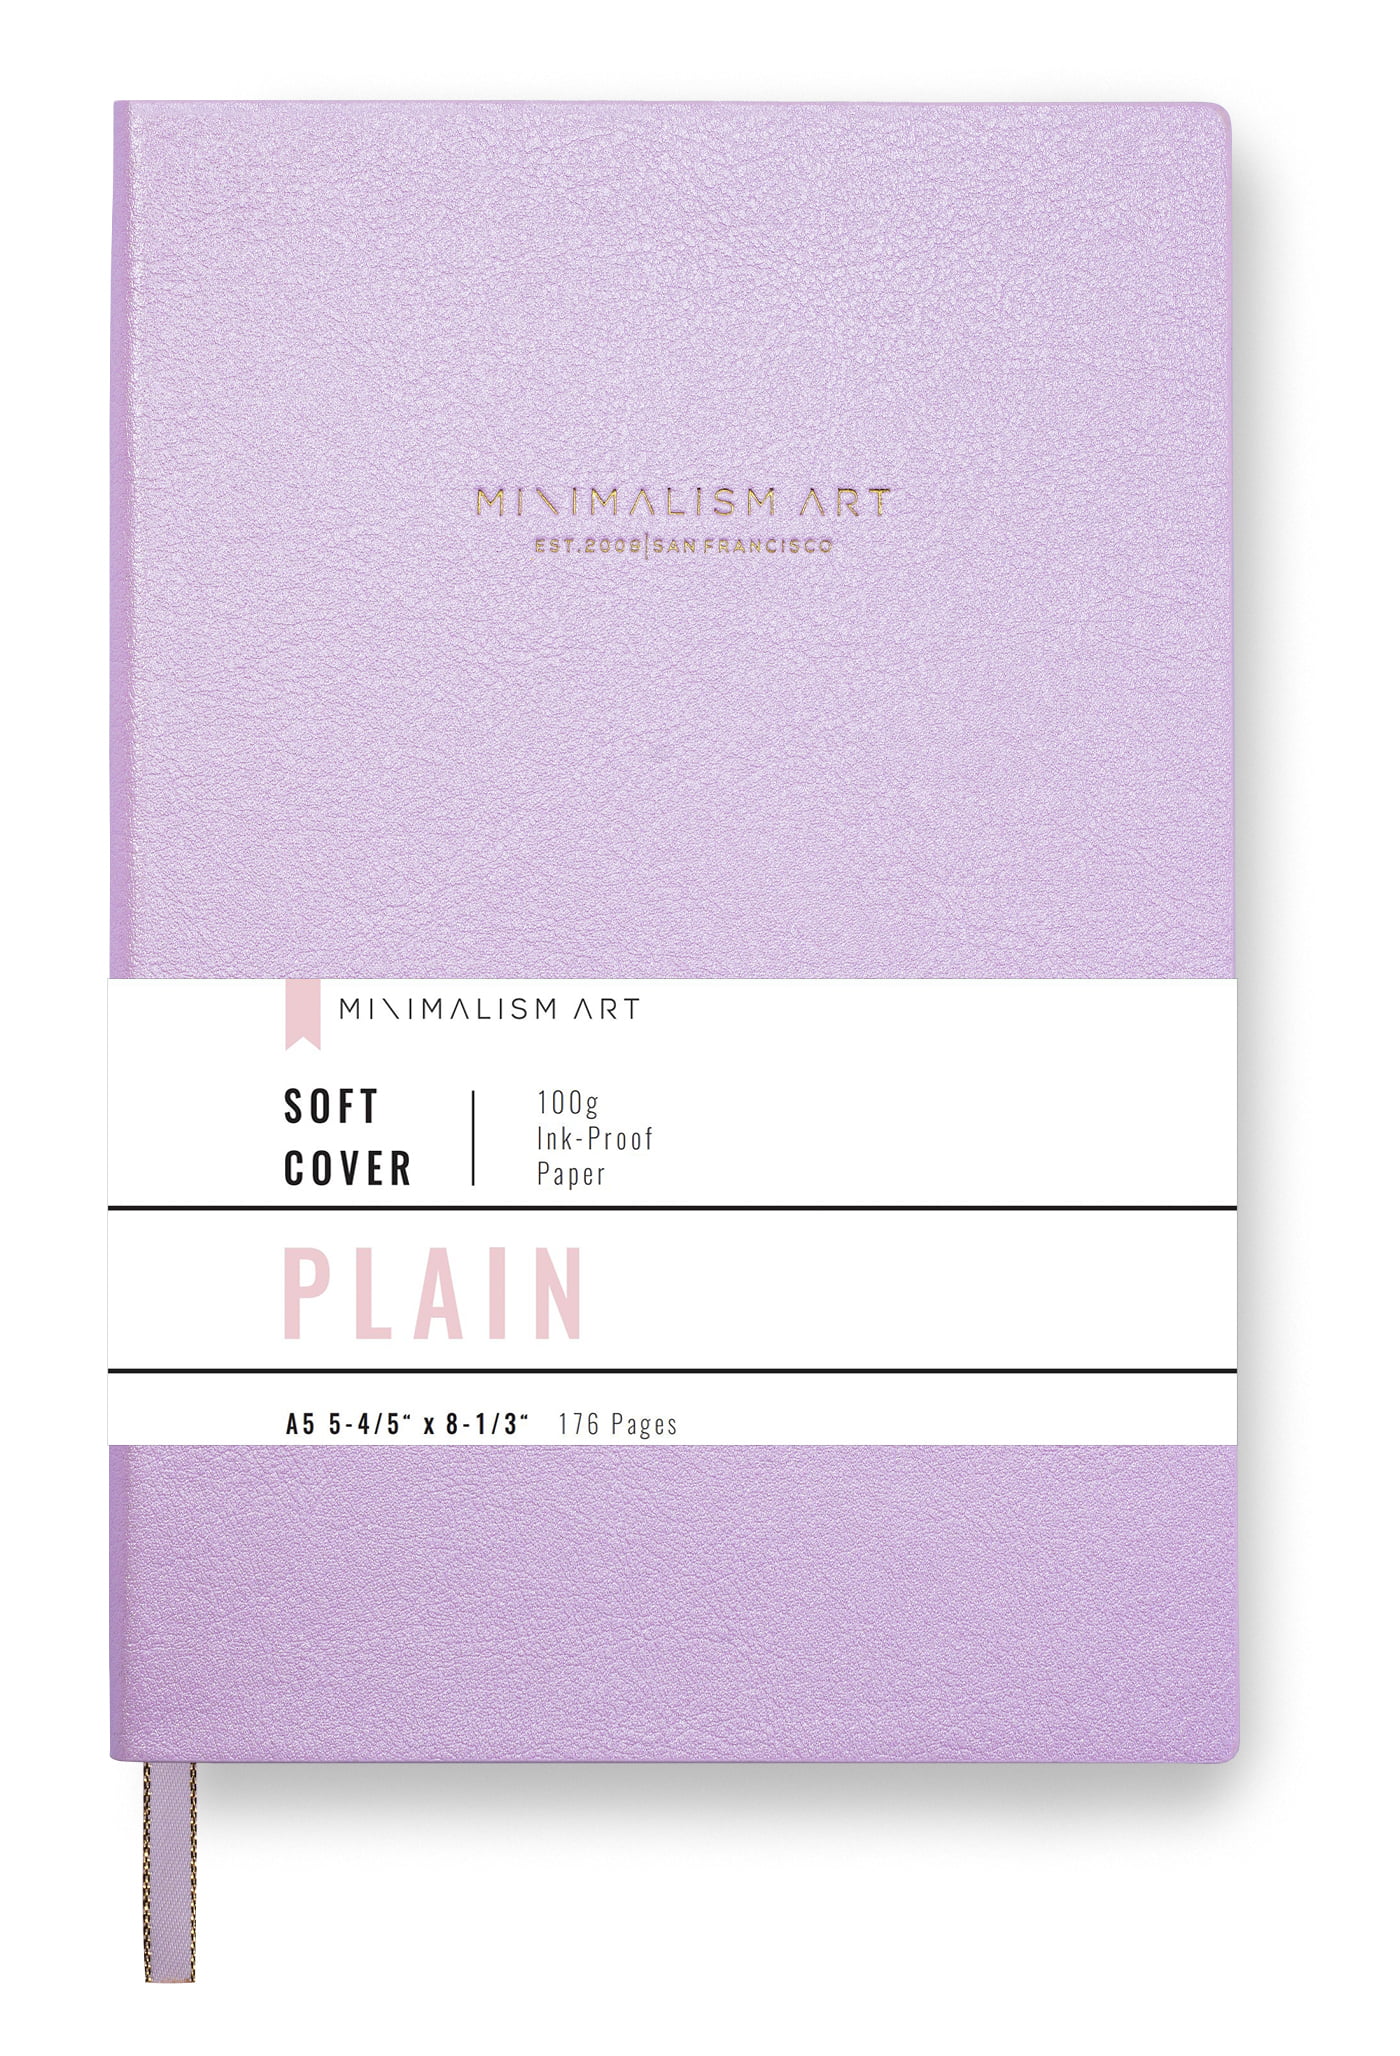 Medium Size San Francisco Fine PU Leather Classic Soft Cover Notebook Journal Minimalism Art Premium Thick Paper 100gsm A5 5.8 x 8.3 Ribbon Bookmark Plain, Black 176 Pages 